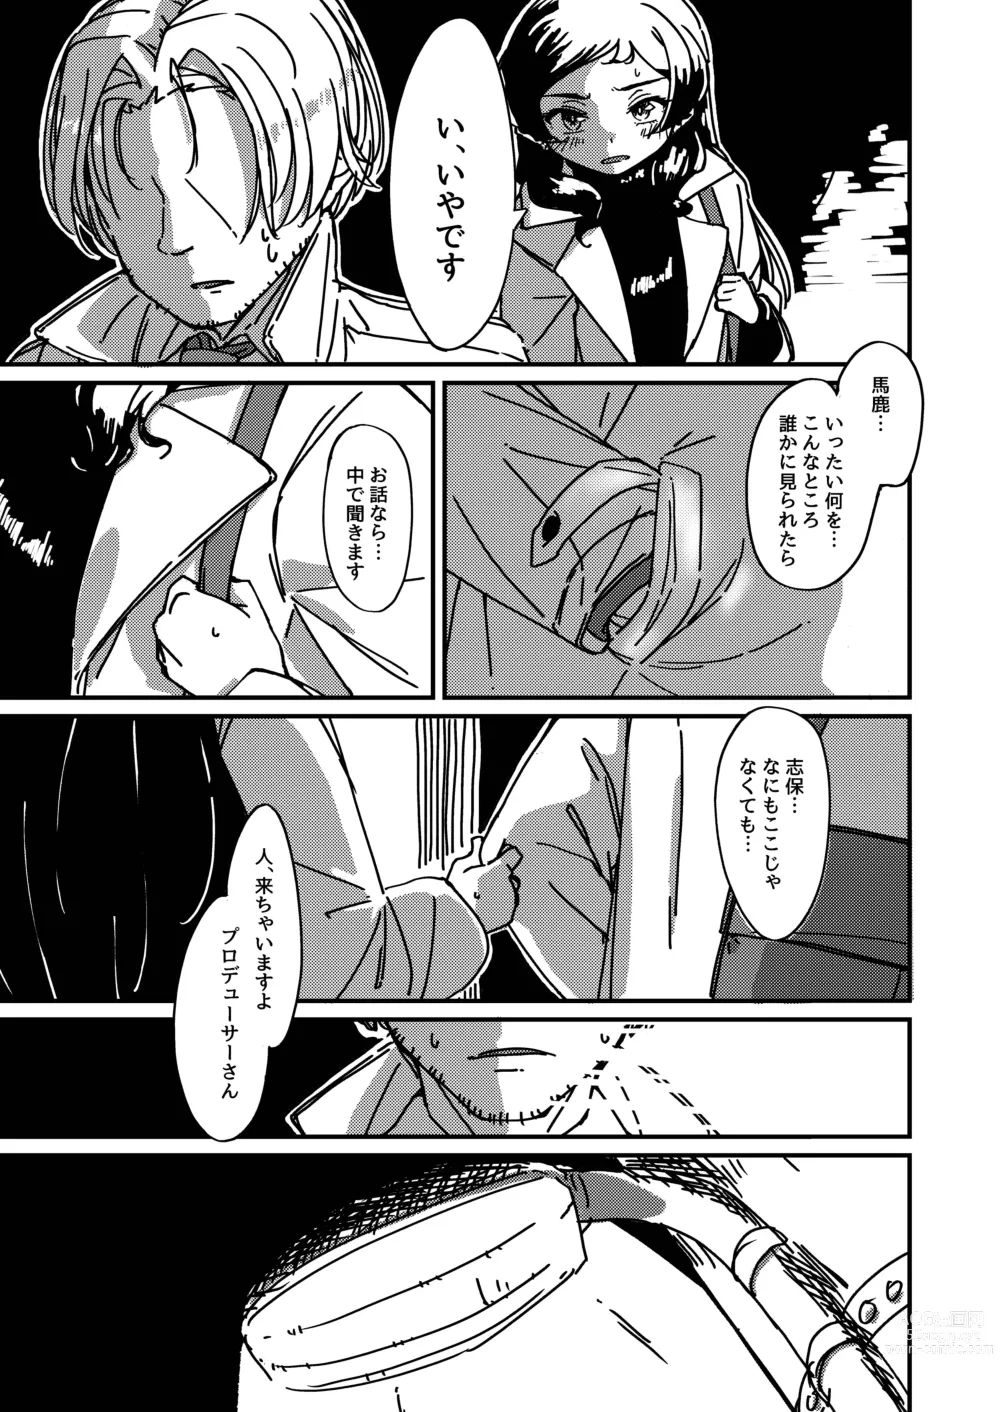 Page 10 of doujinshi Kuroneko no Kyouji + Aruhi no Kuro Usagi